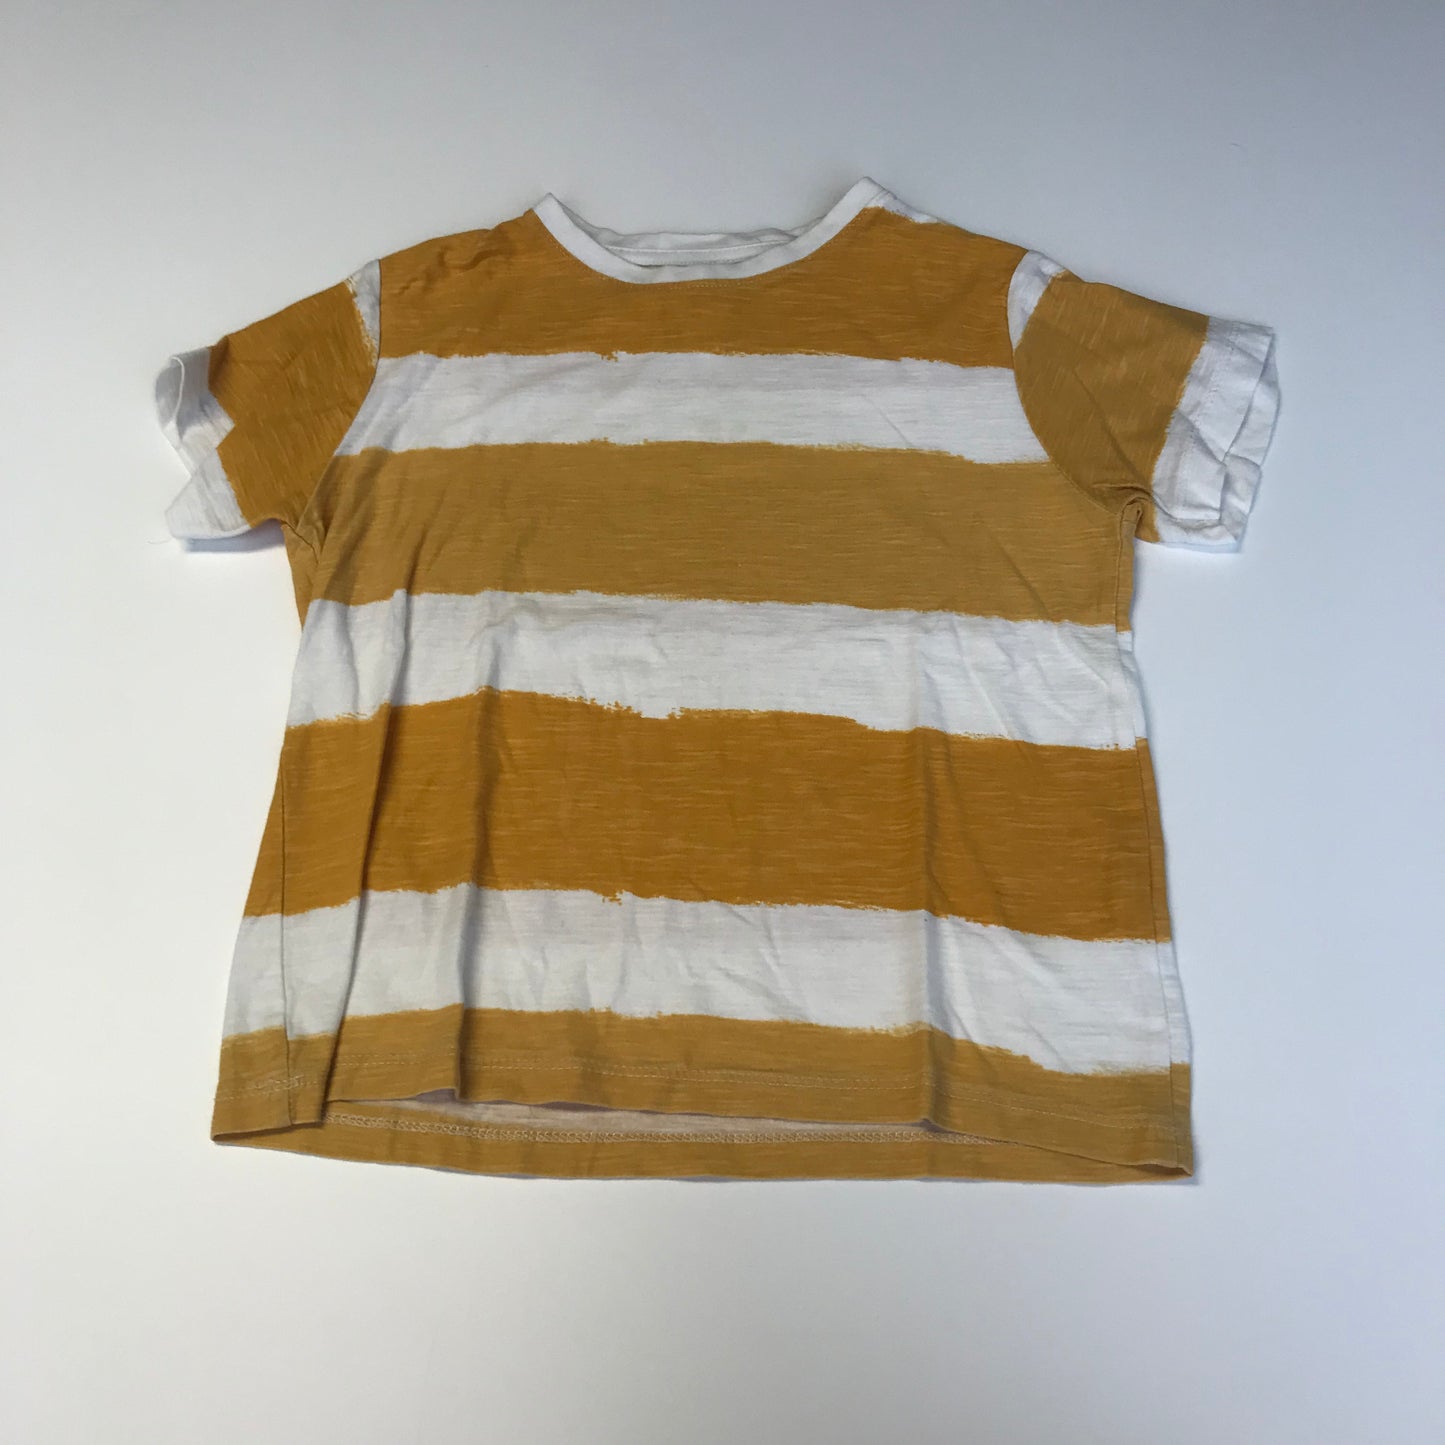 Zara Mustard Striped T-shirt Age 6